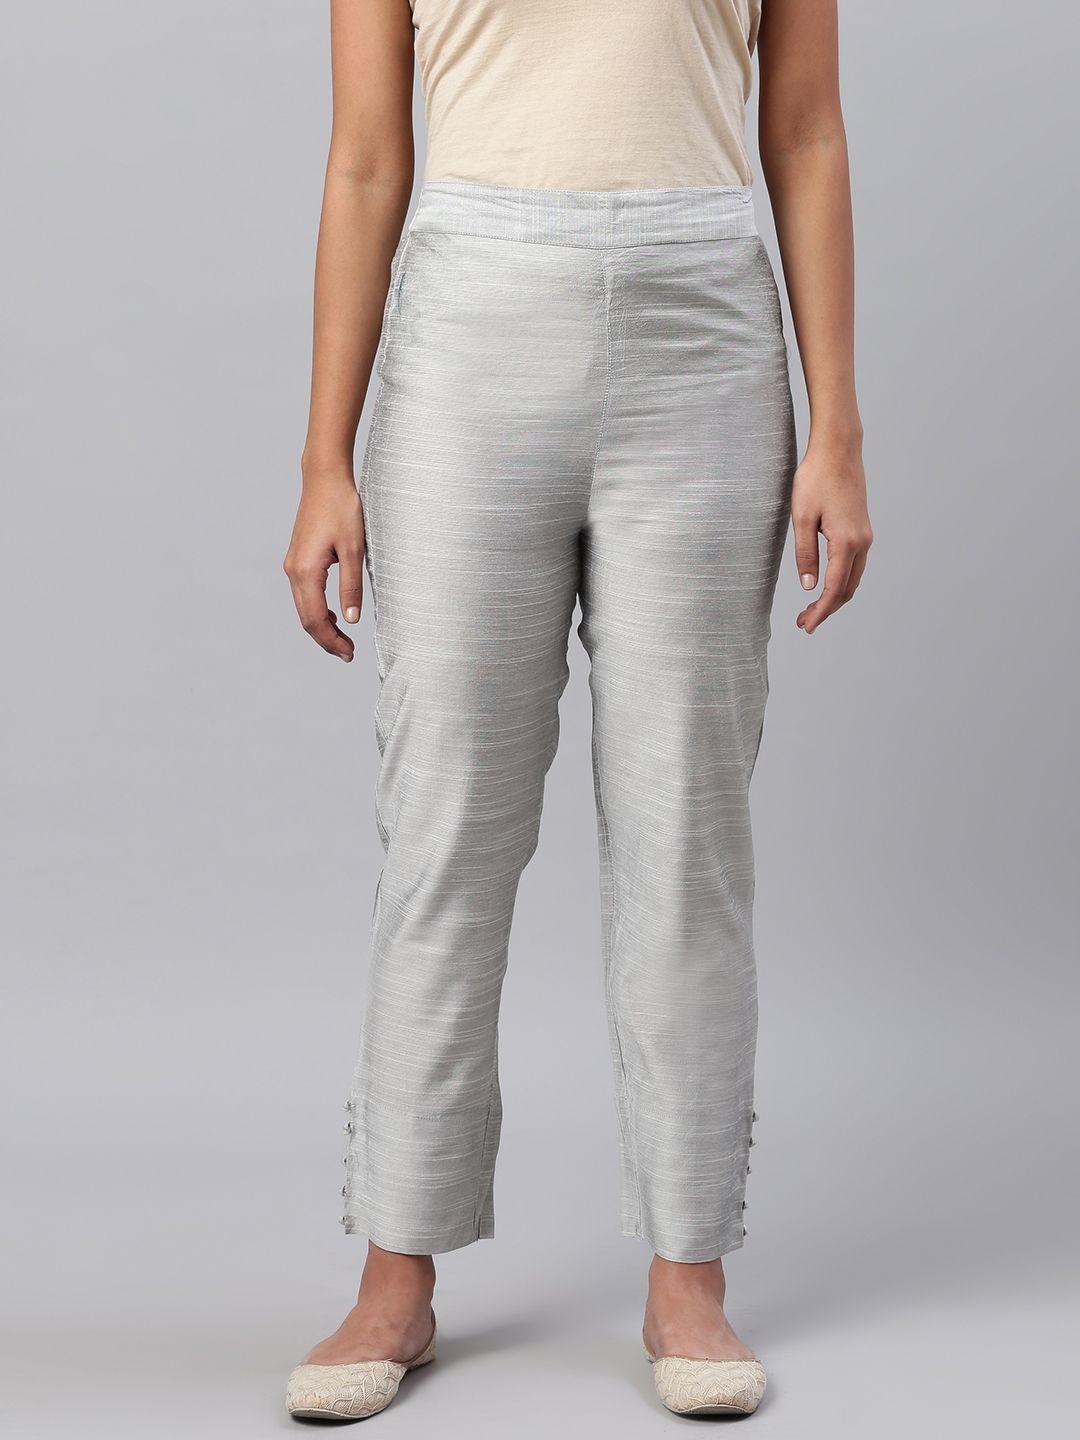 ksut-women-grey-regular-fit-solid-trousers